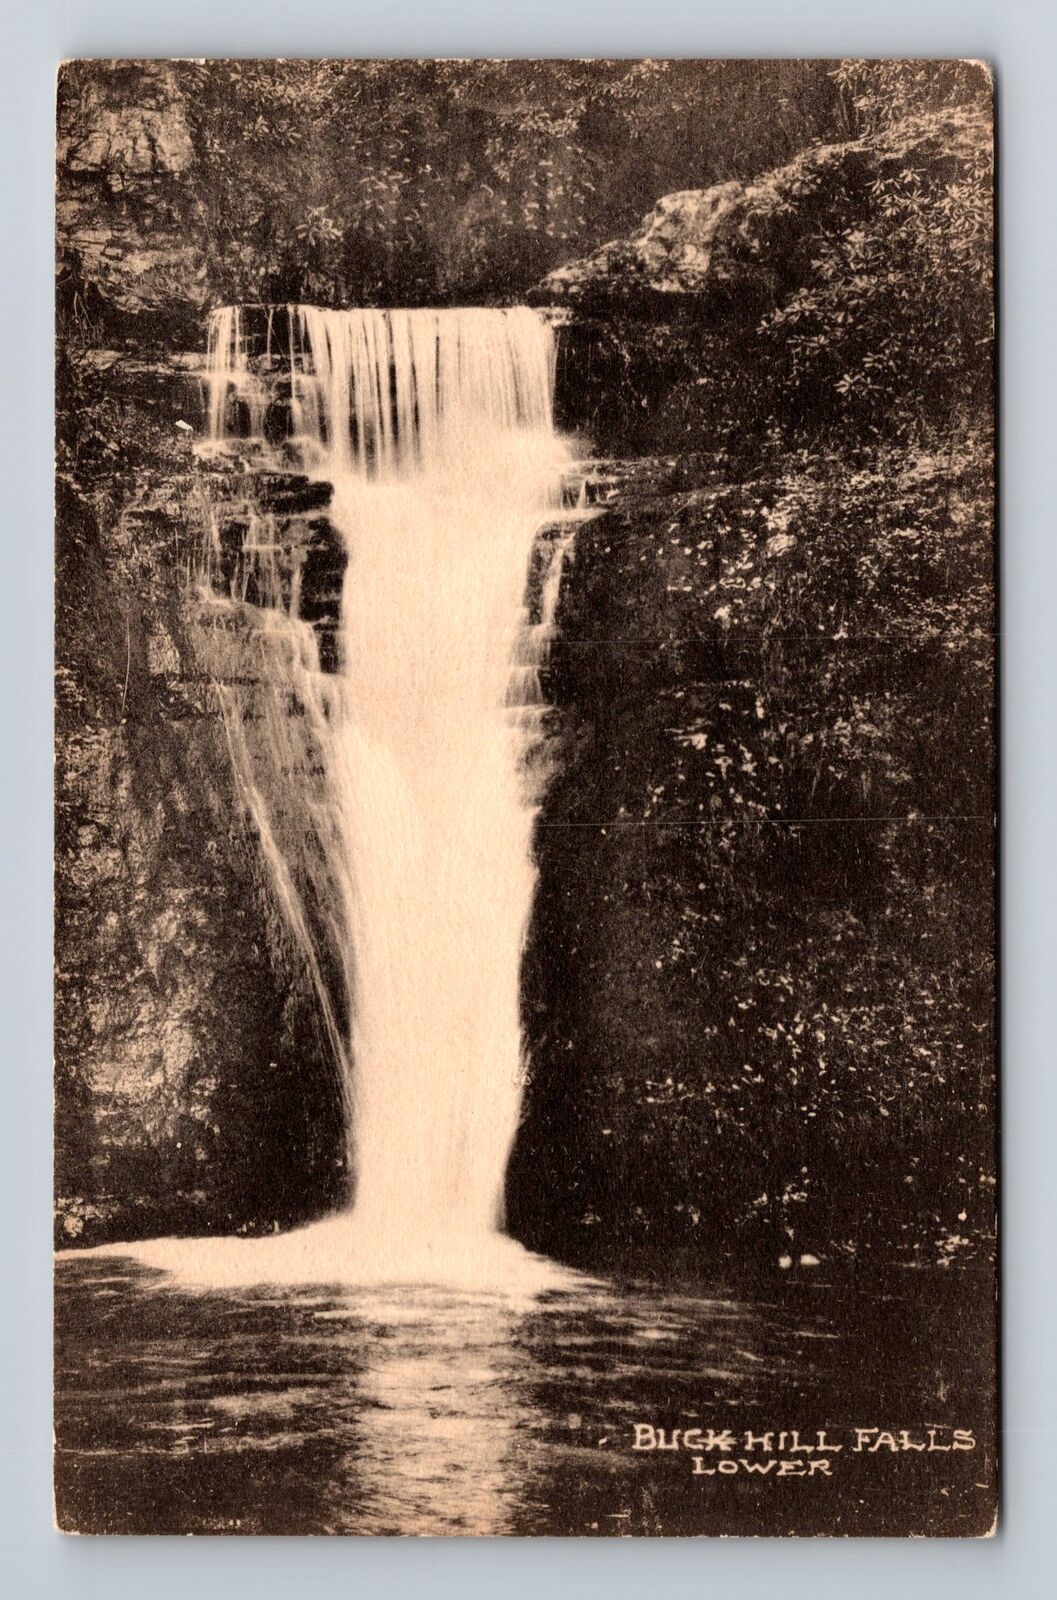 Buck Hill Falls PA-Pennsylvania, Scenic Lower Buck Hill Falls, Vintage Postcard